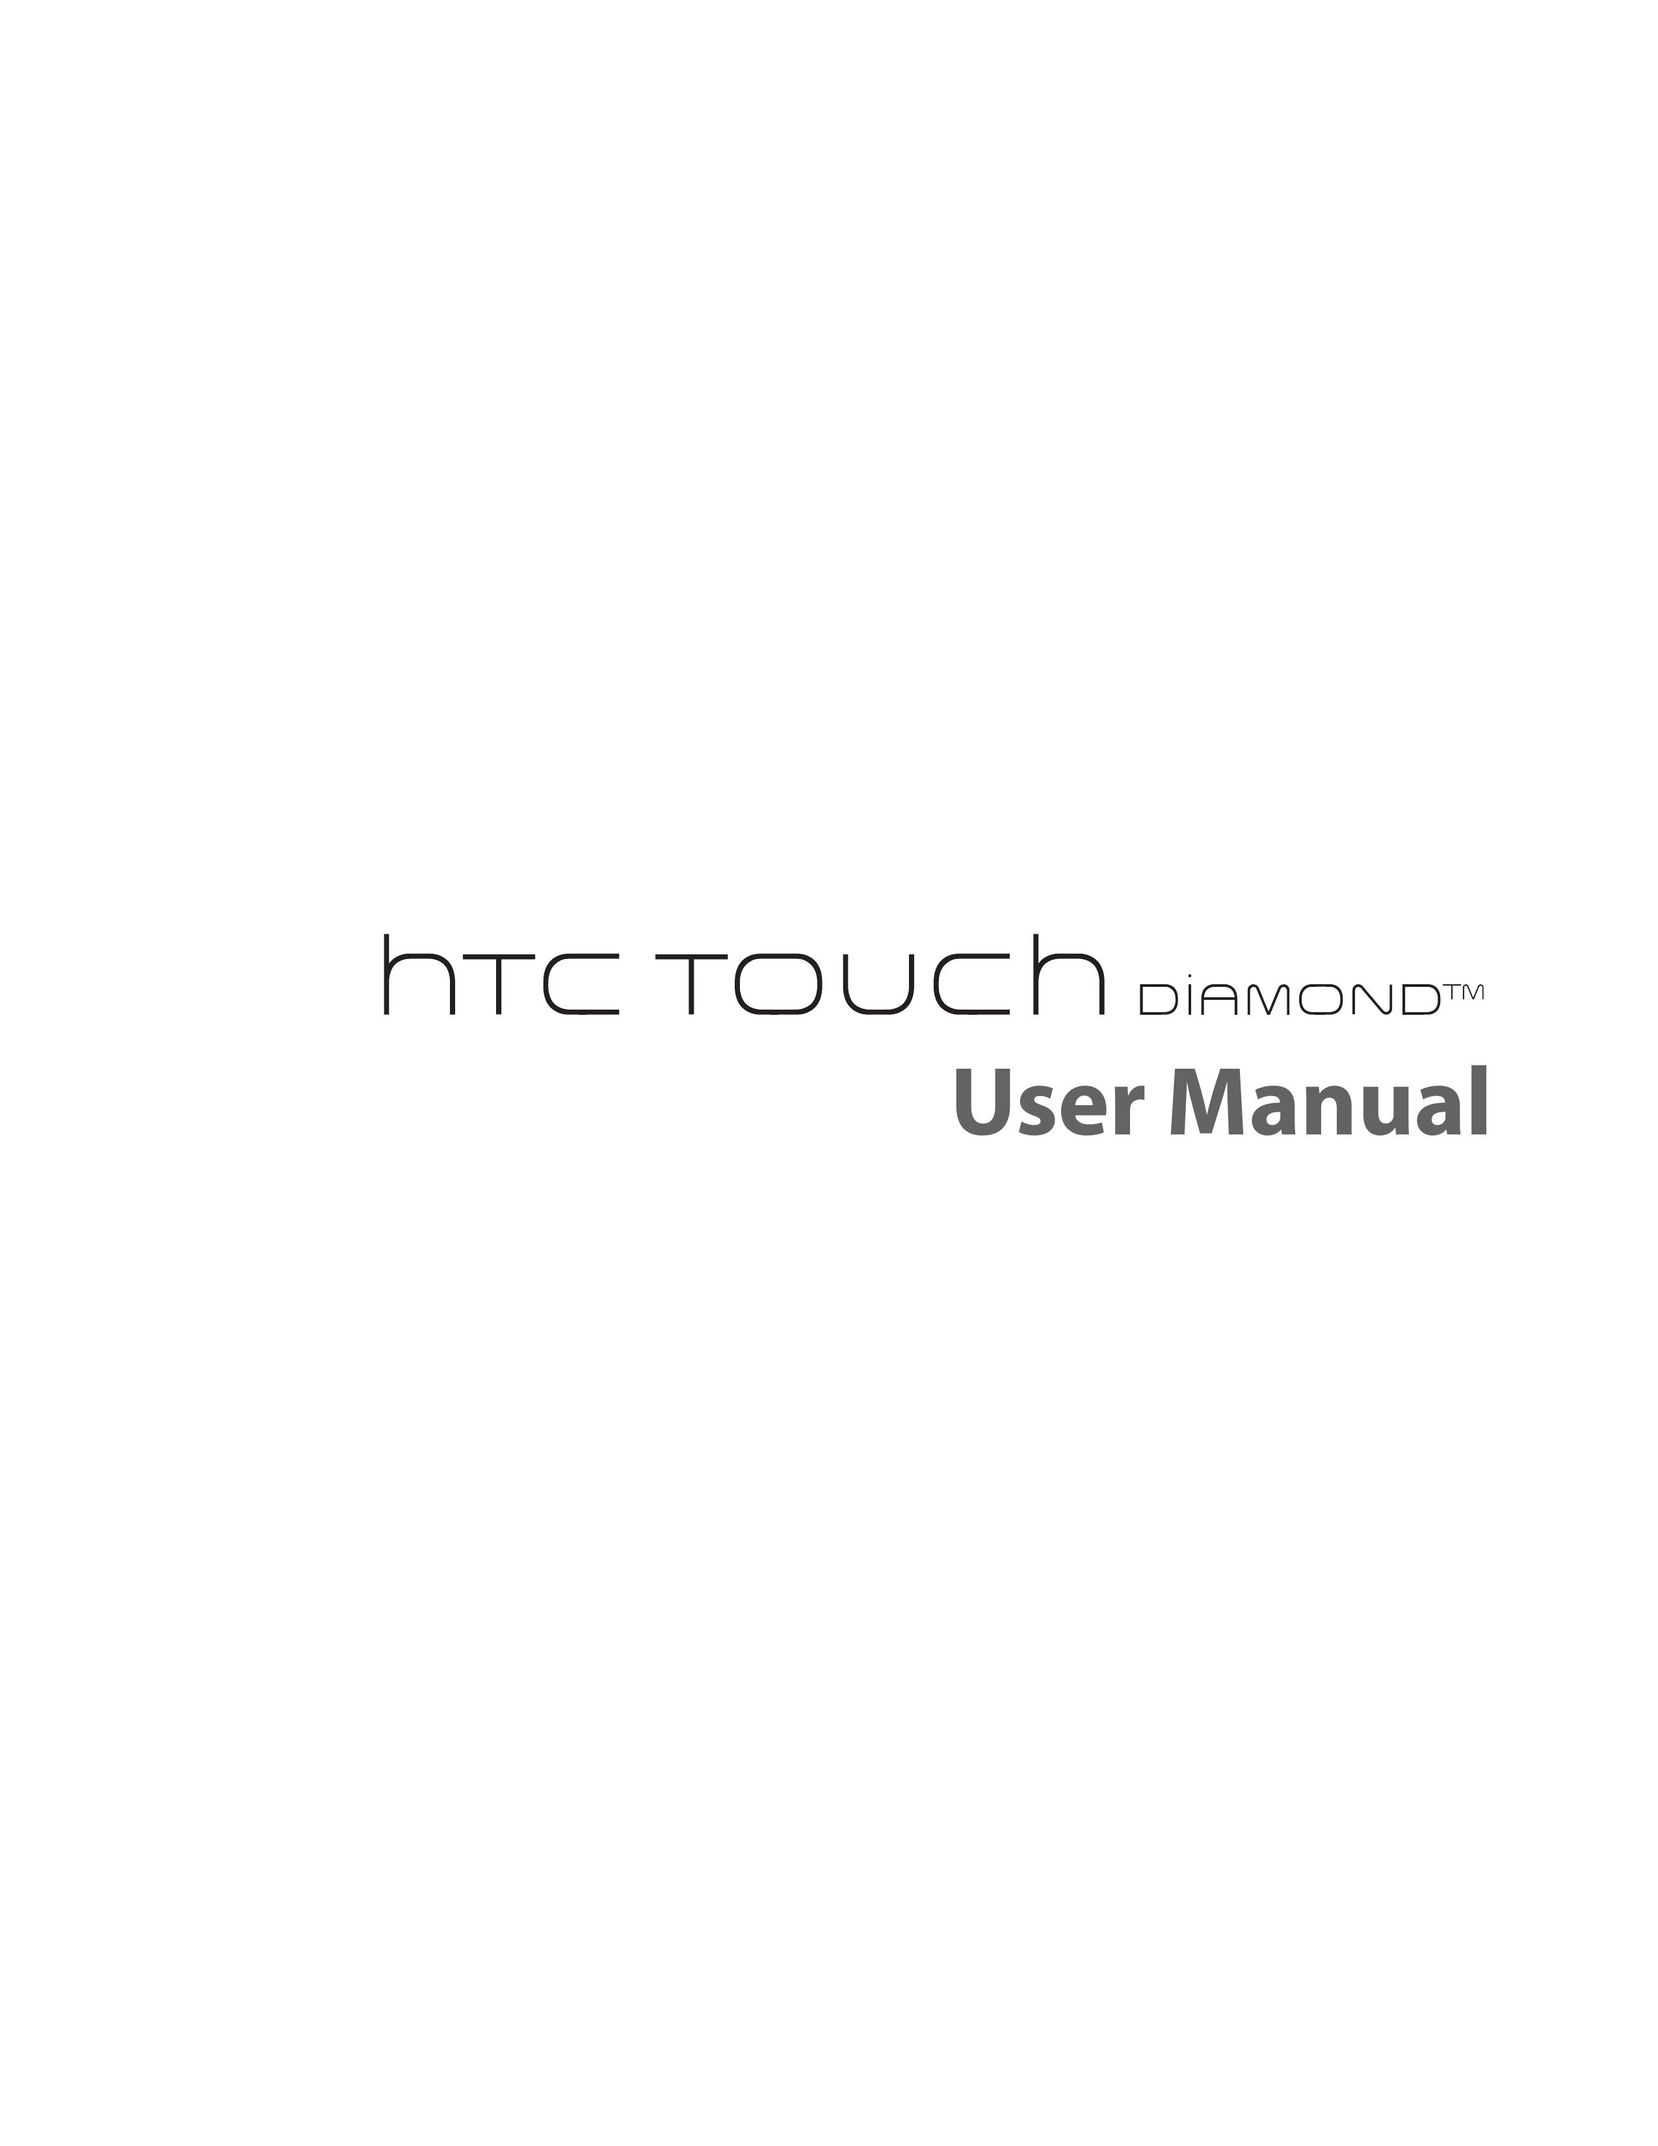 HTC DIAM400 Cell Phone User Manual